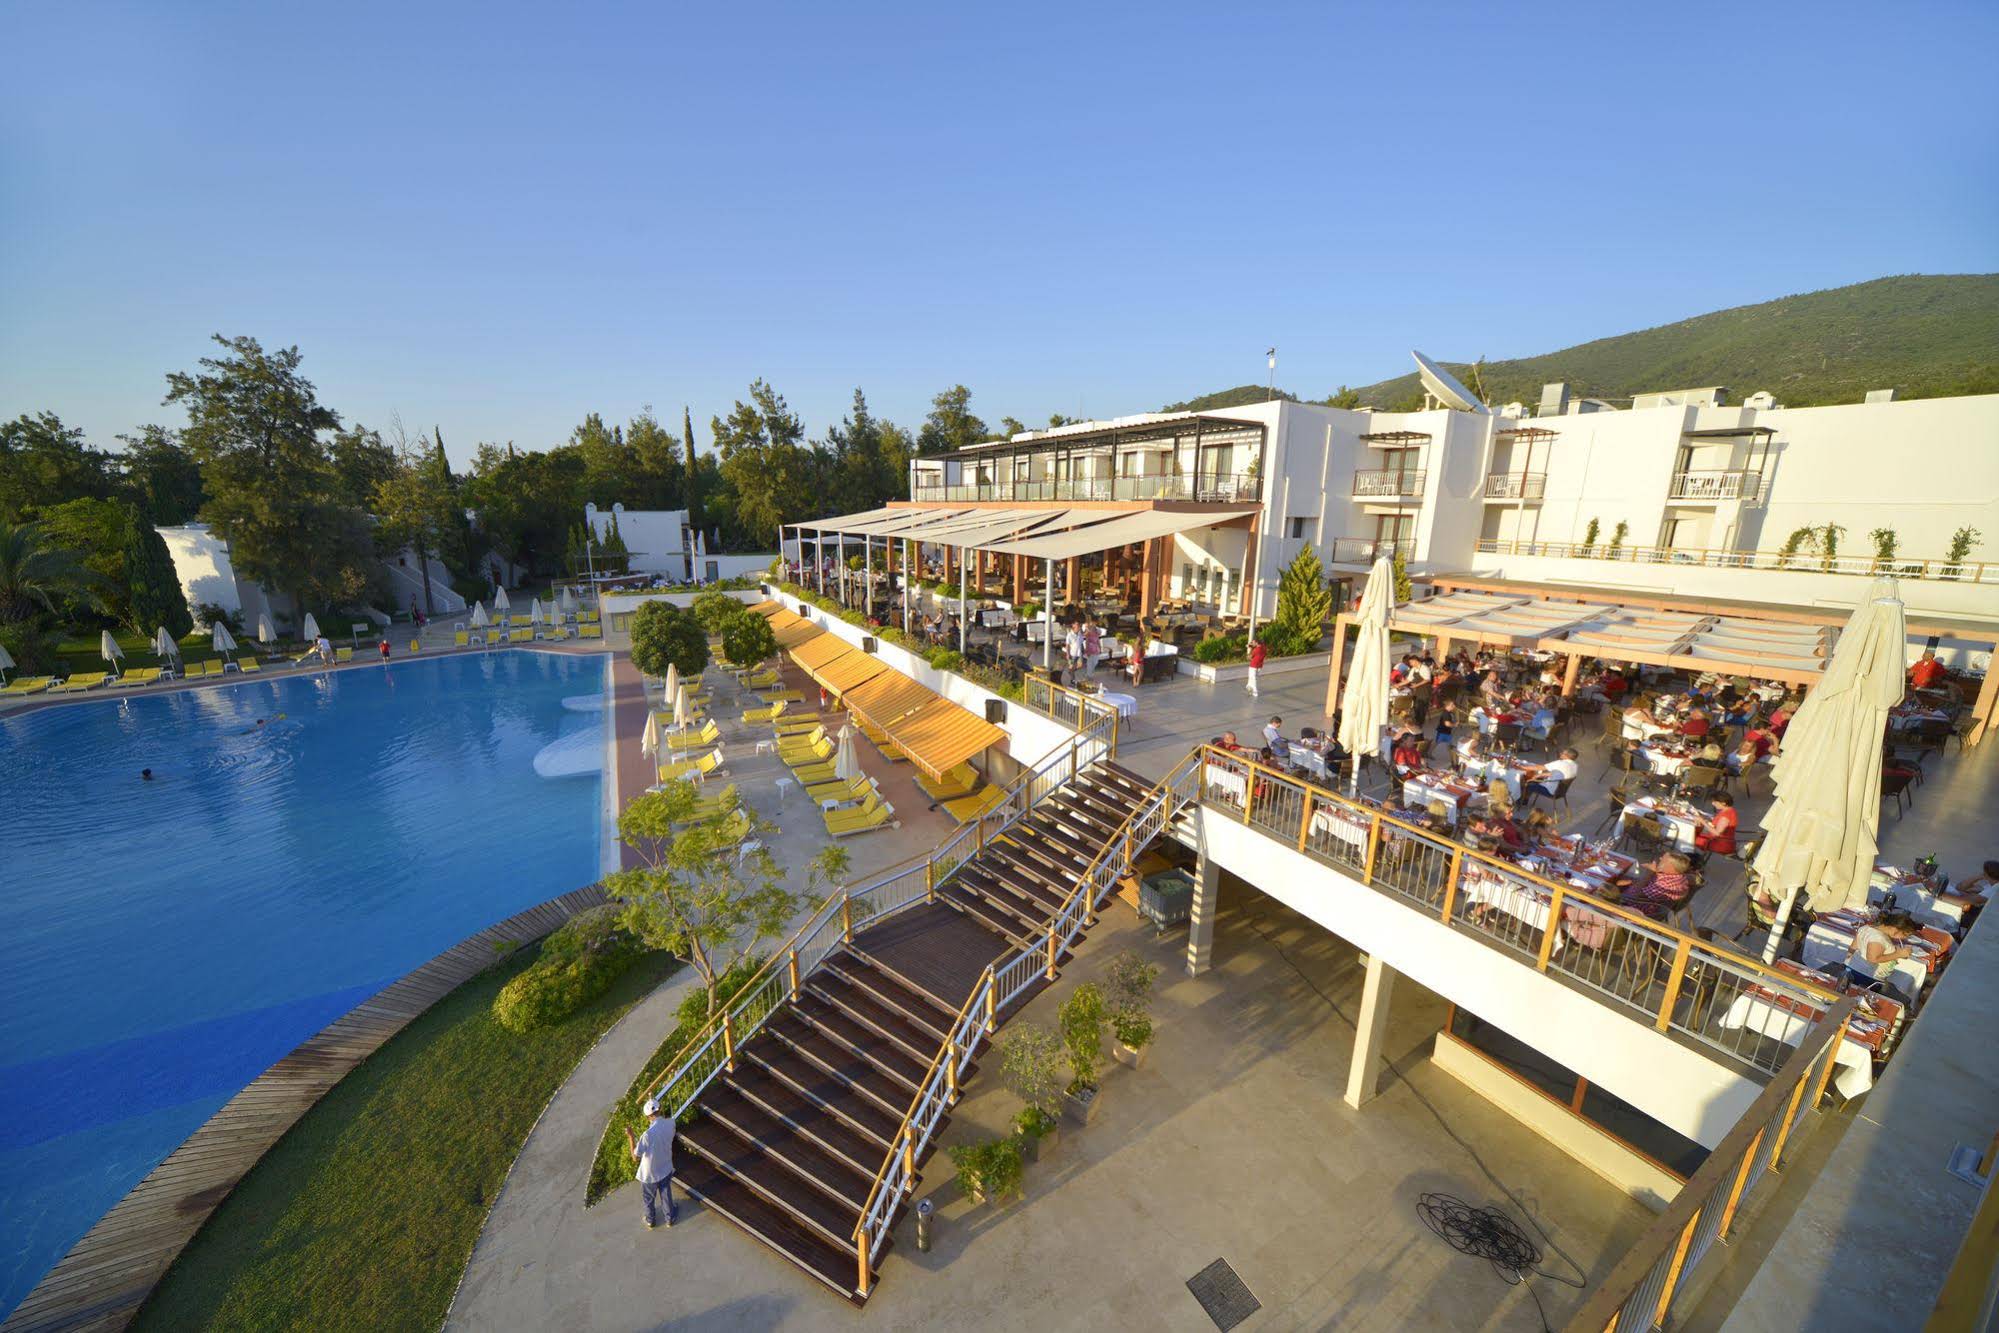 Isil Club Bodrum Herşey Dahil (Doubletree by Hilton Bodrum Isıl Club Resort - All Inclusive)